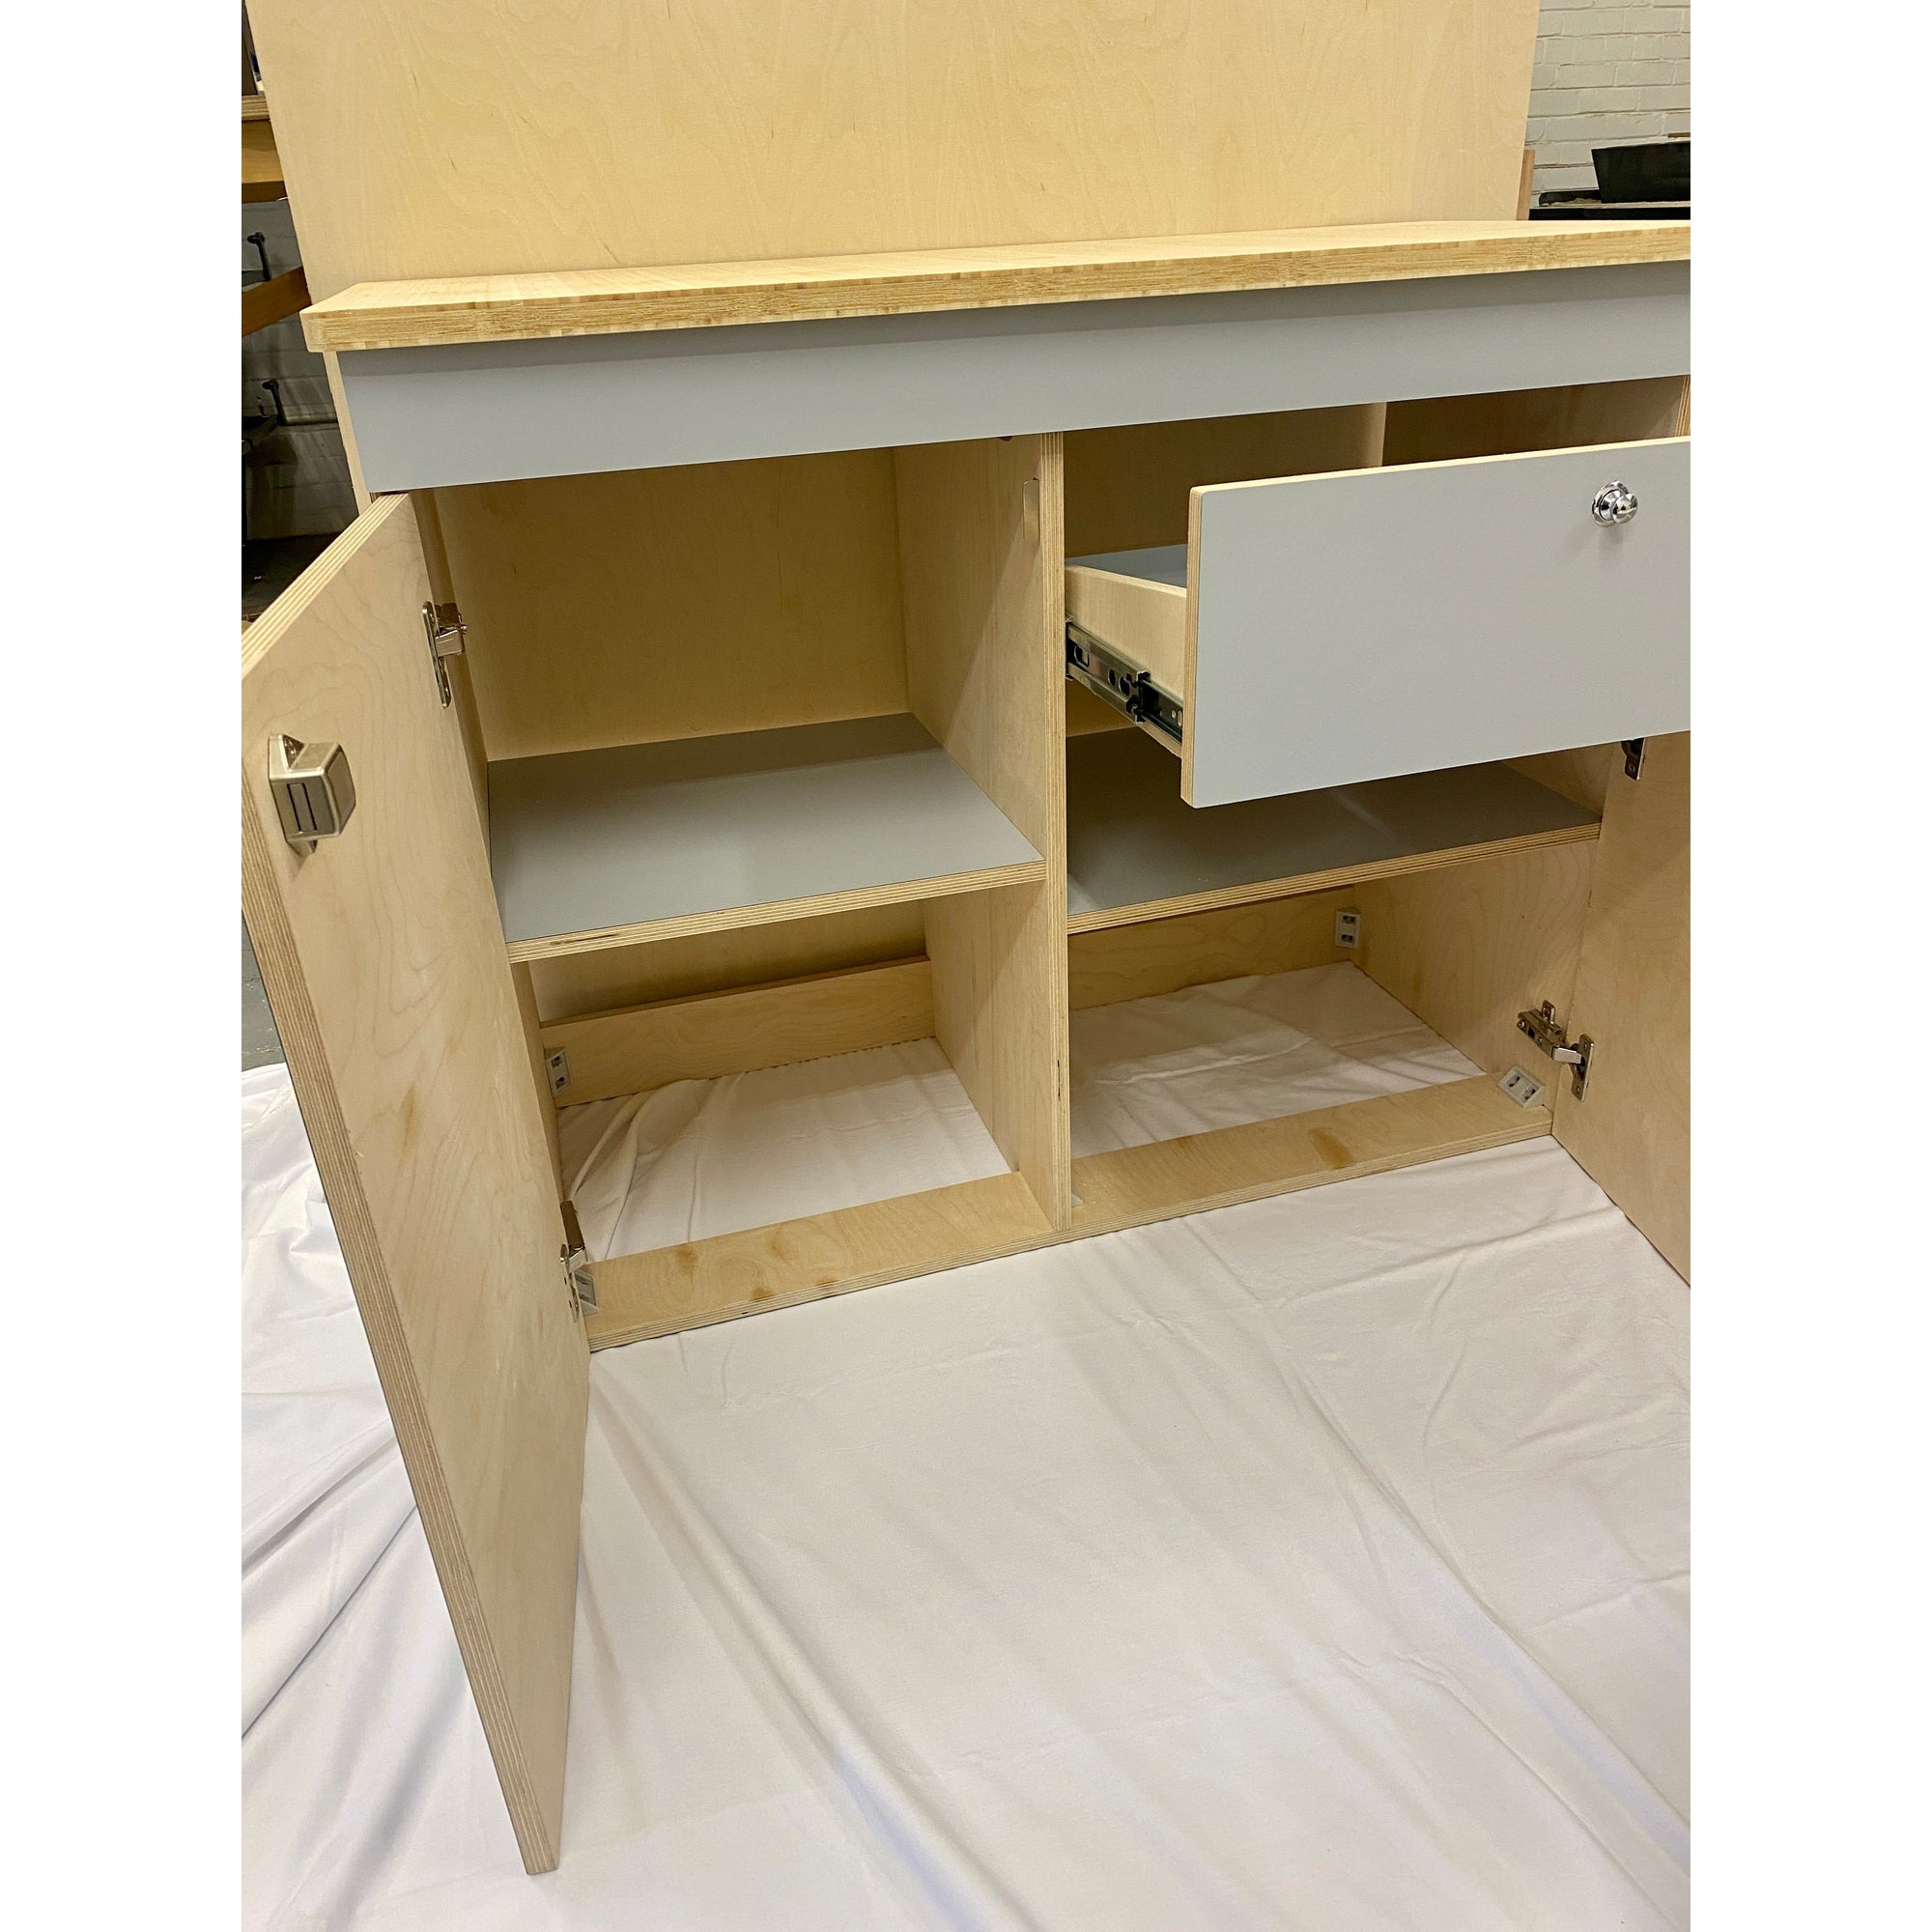 Birch plywood kitchen cupboard 930mm, laminated, fits SMEV9722R and Vitrifrigo fridge VanGo Campers